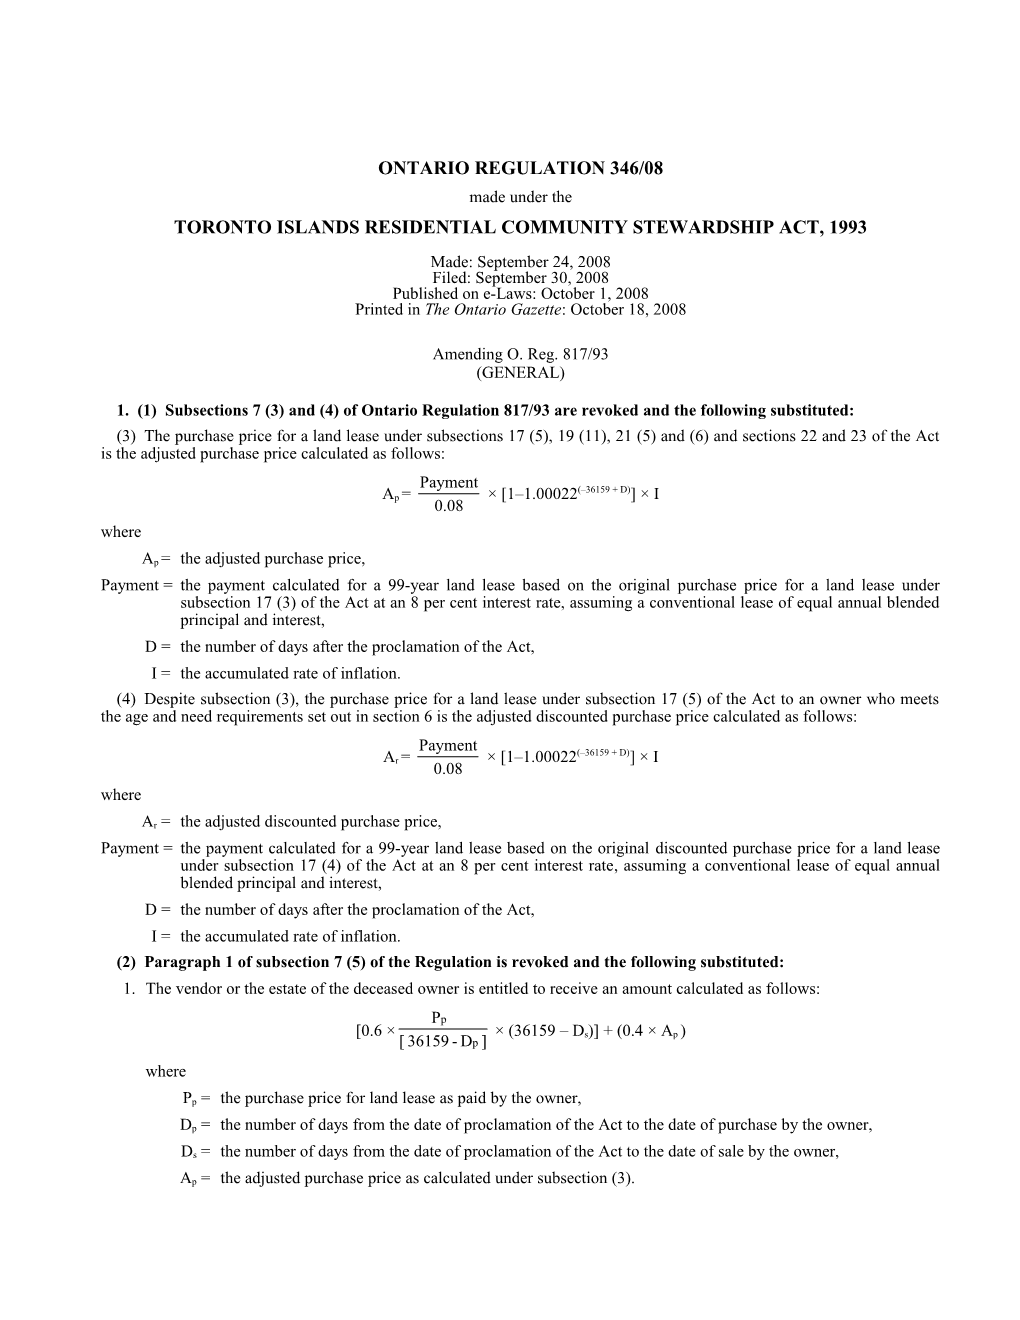 TORONTO ISLANDS RESIDENTIAL COMMUNITY STEWARDSHIP ACT, 1993 - O. Reg. 346/08